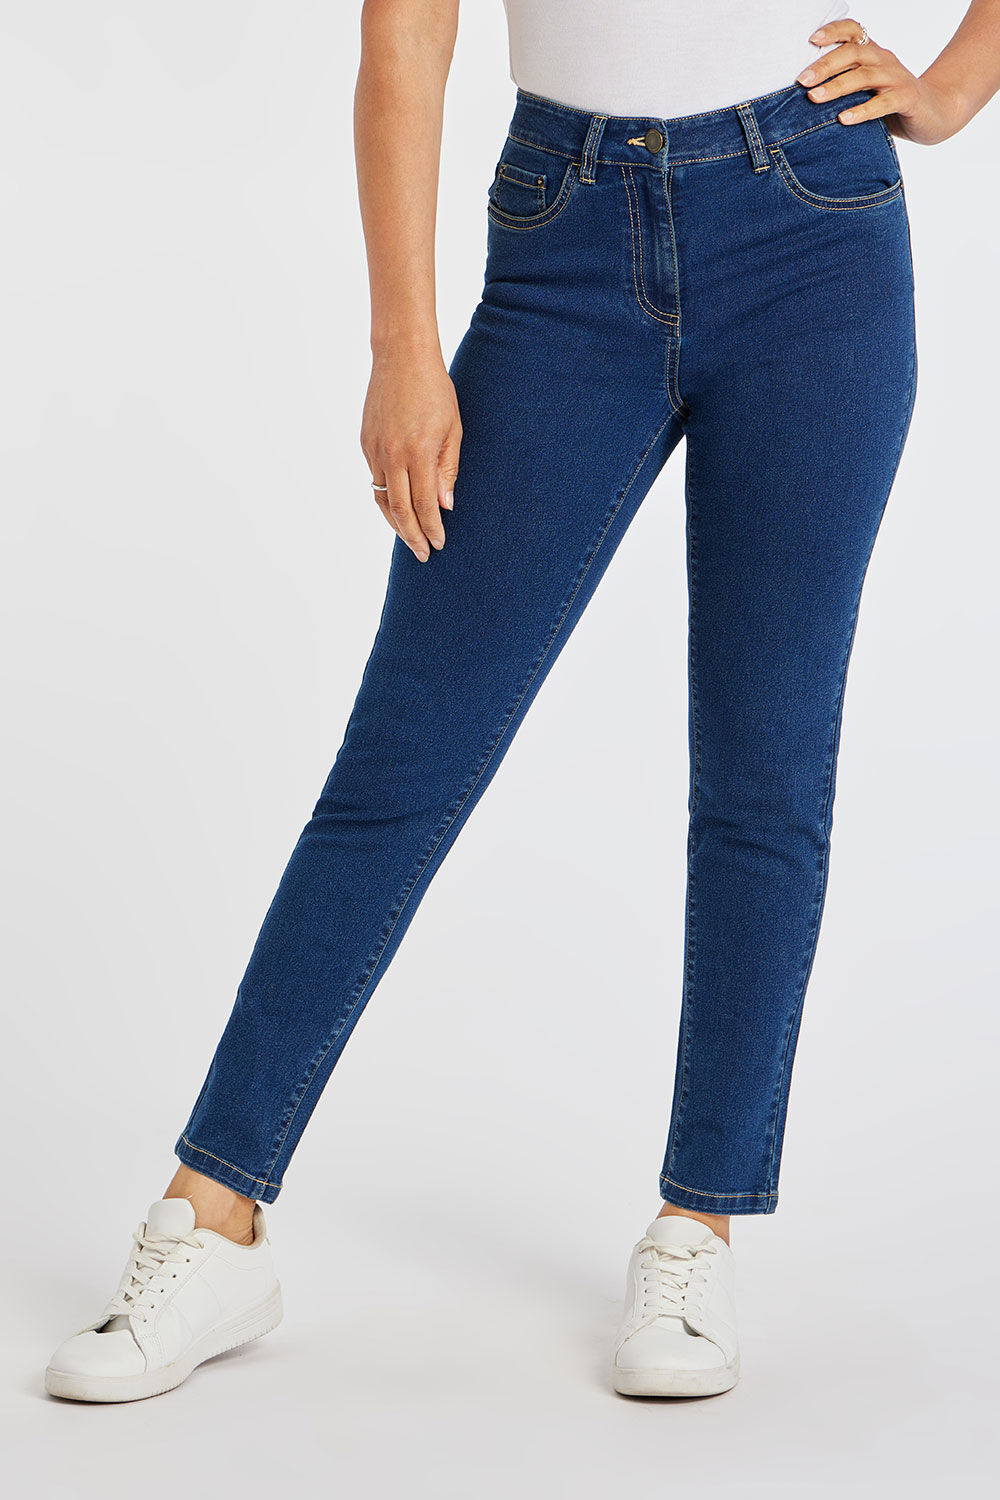 Bonmarche Denim The Susie Slim Leg Jeans, Size: 28